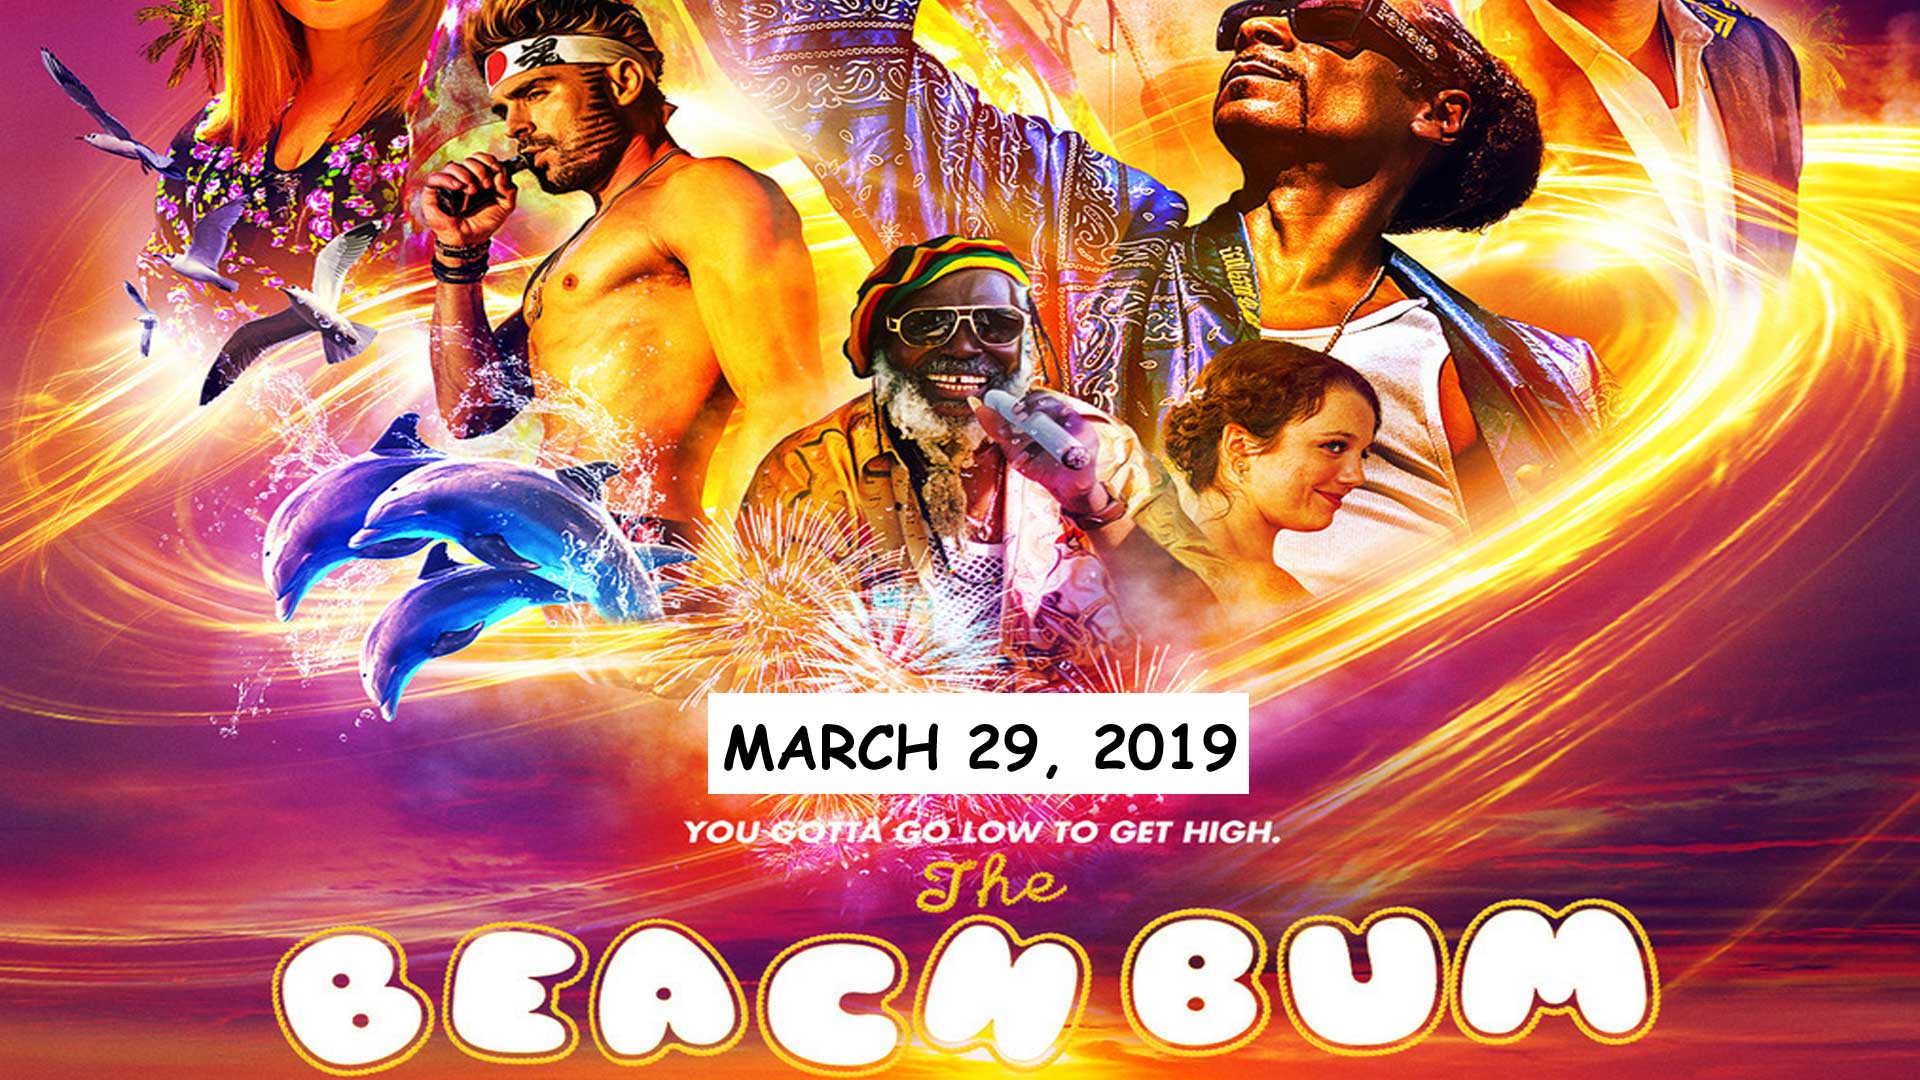 The Beach Bum Hollywood Movie Trailer - Zac Efron The Beach Bum , HD Wallpaper & Backgrounds